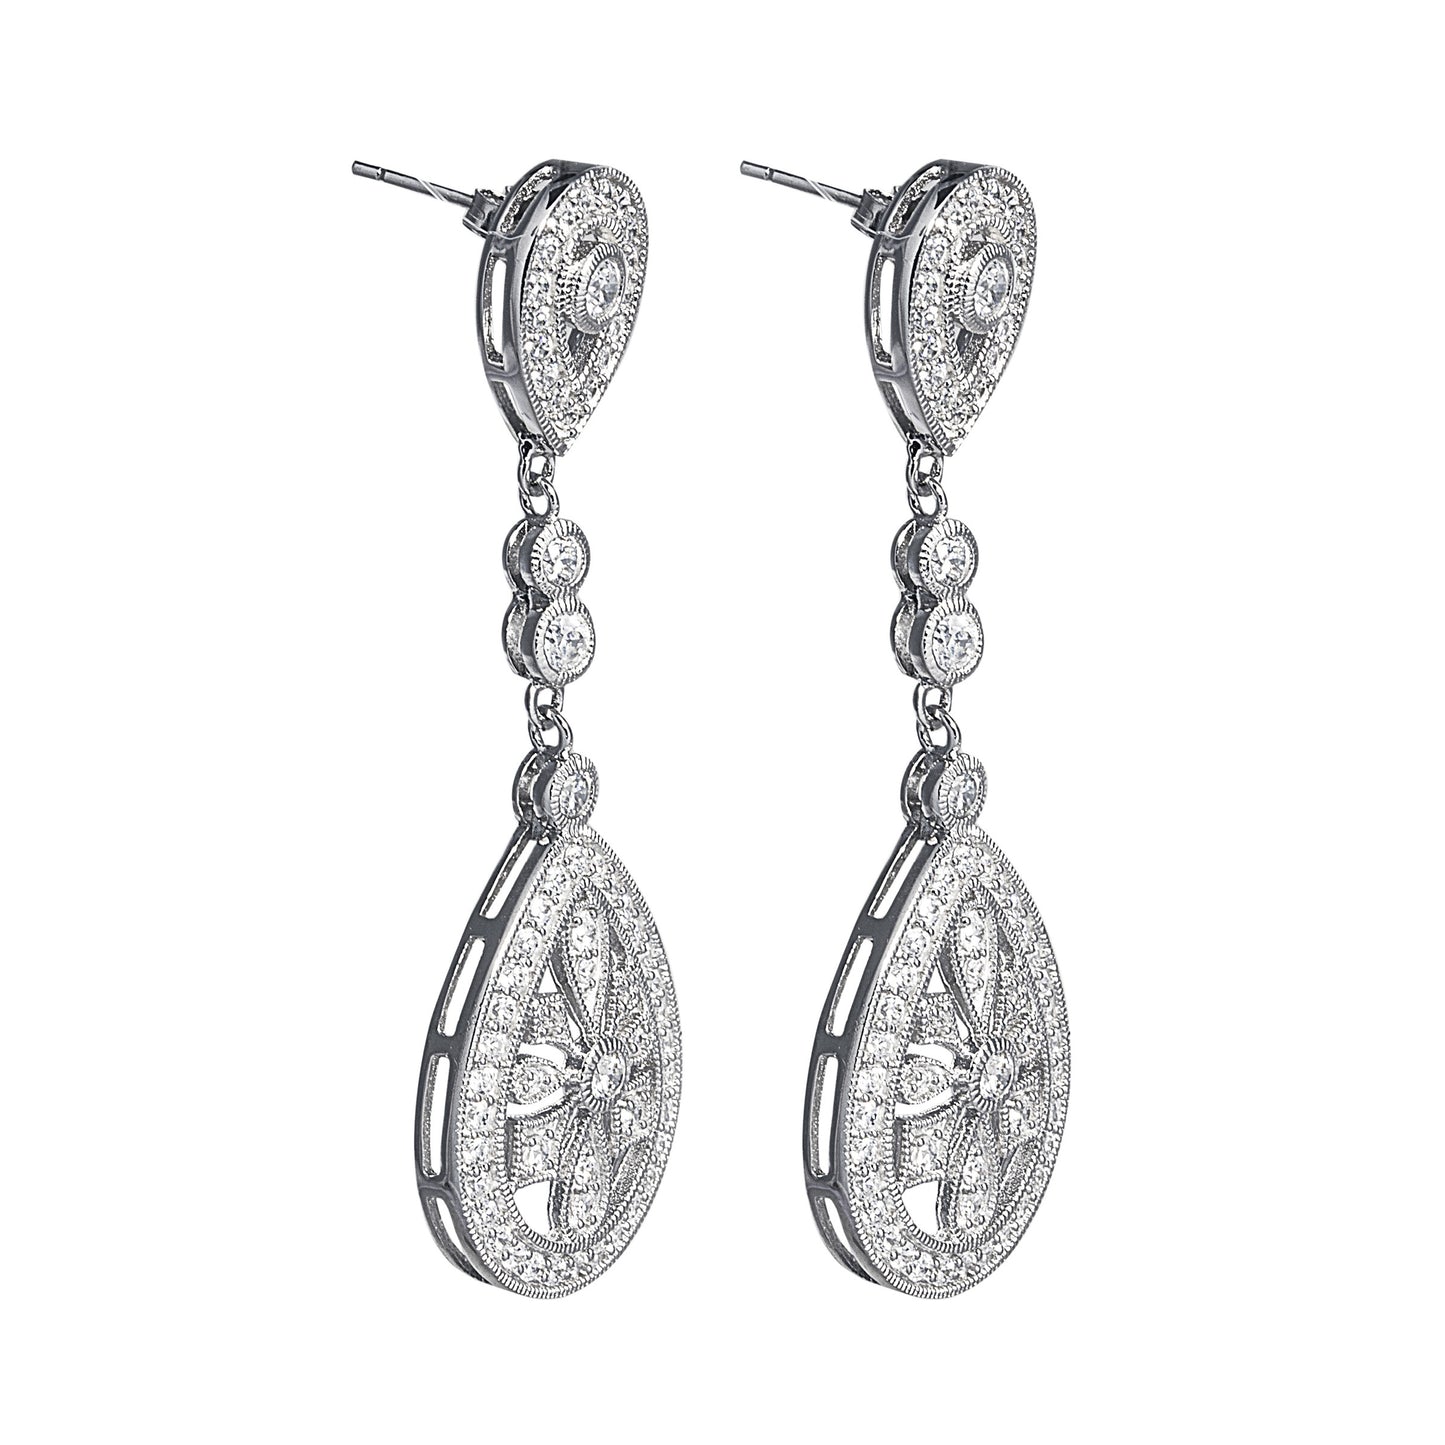 Chandelier Drop Earrings in 925 sterling silver, cubic zirconia stones in an elaborate chandelier design. Worldwide shipping from Australia. Special occasion jewellery by Bellagio & Co.